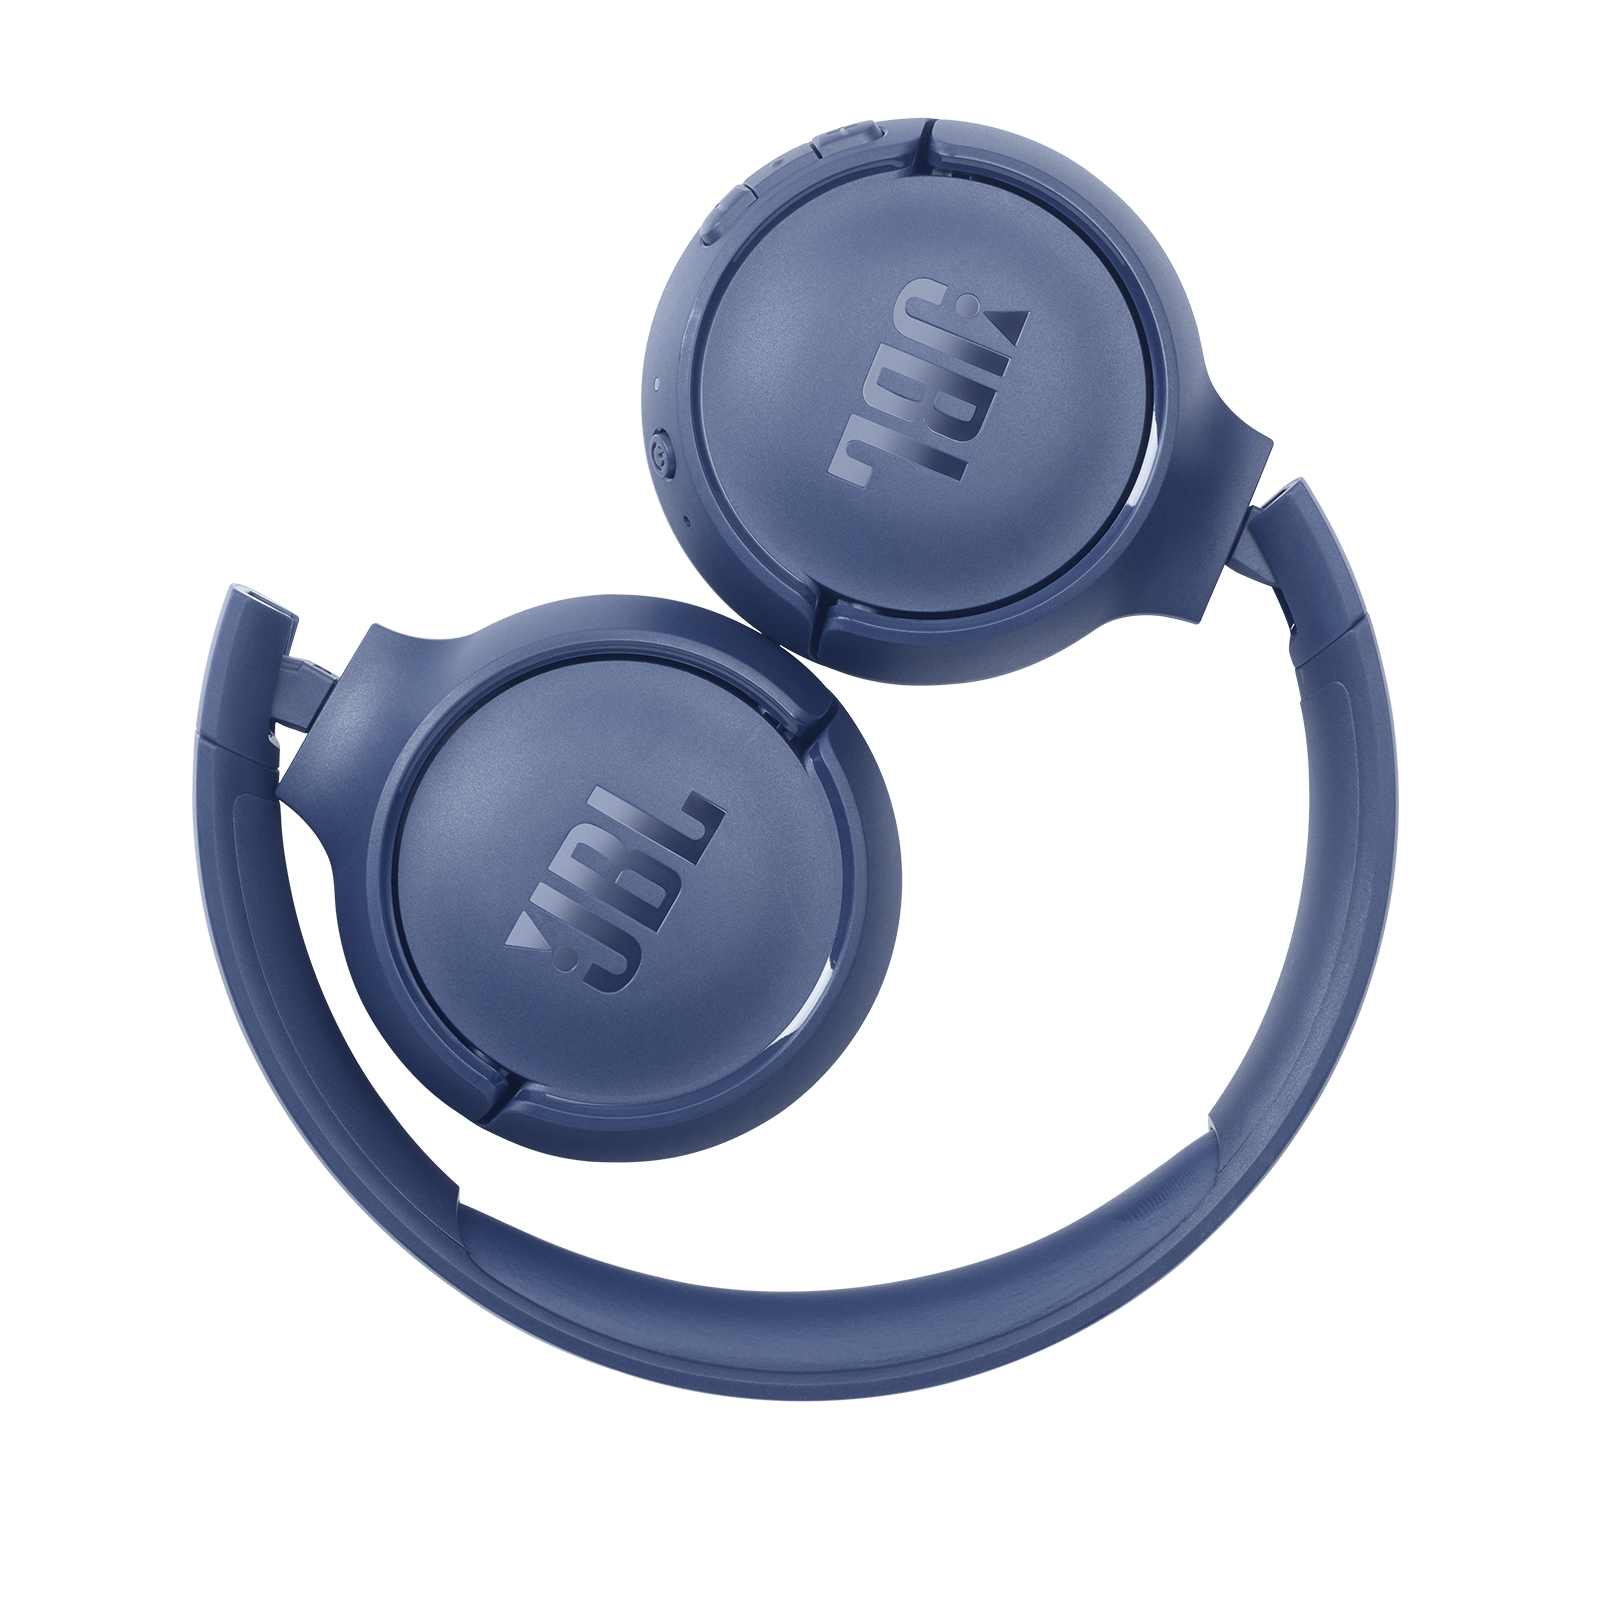 OPEN BOX - Audífonos JBL Tune T510 Pure Bass On Ear BT Azul